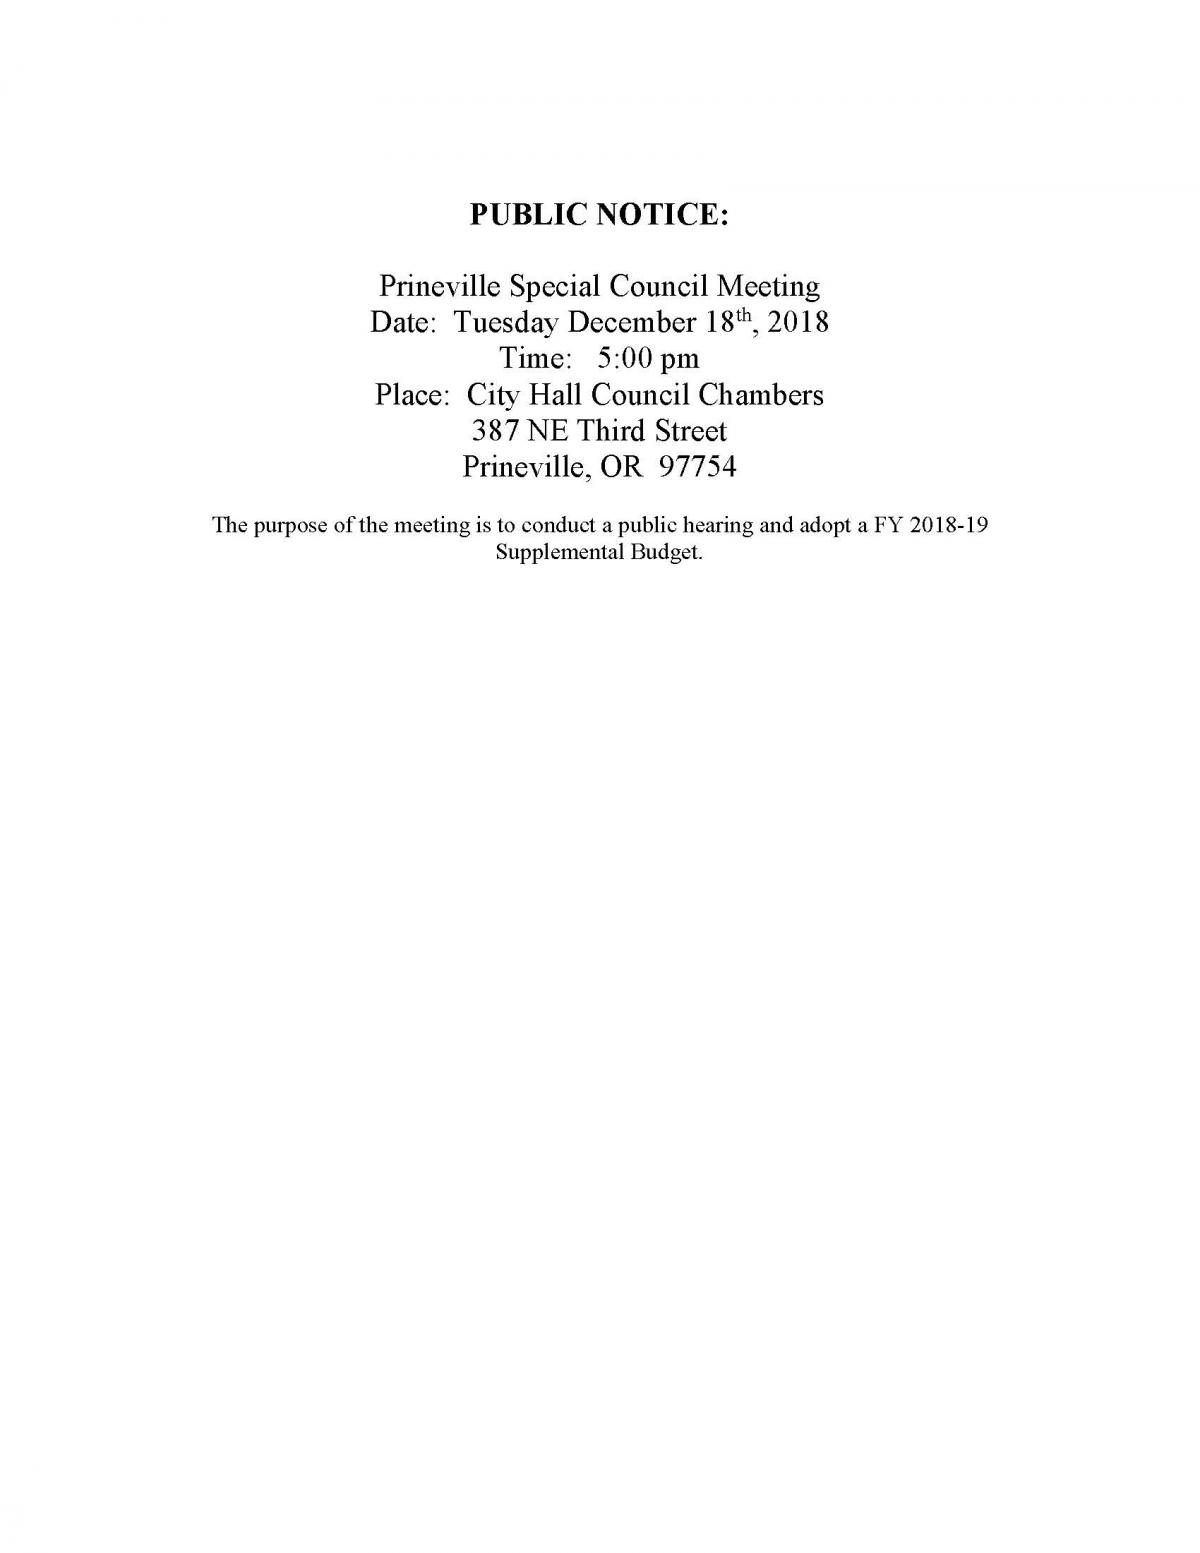 Public Notice - Council Special Meeting 12-18-18